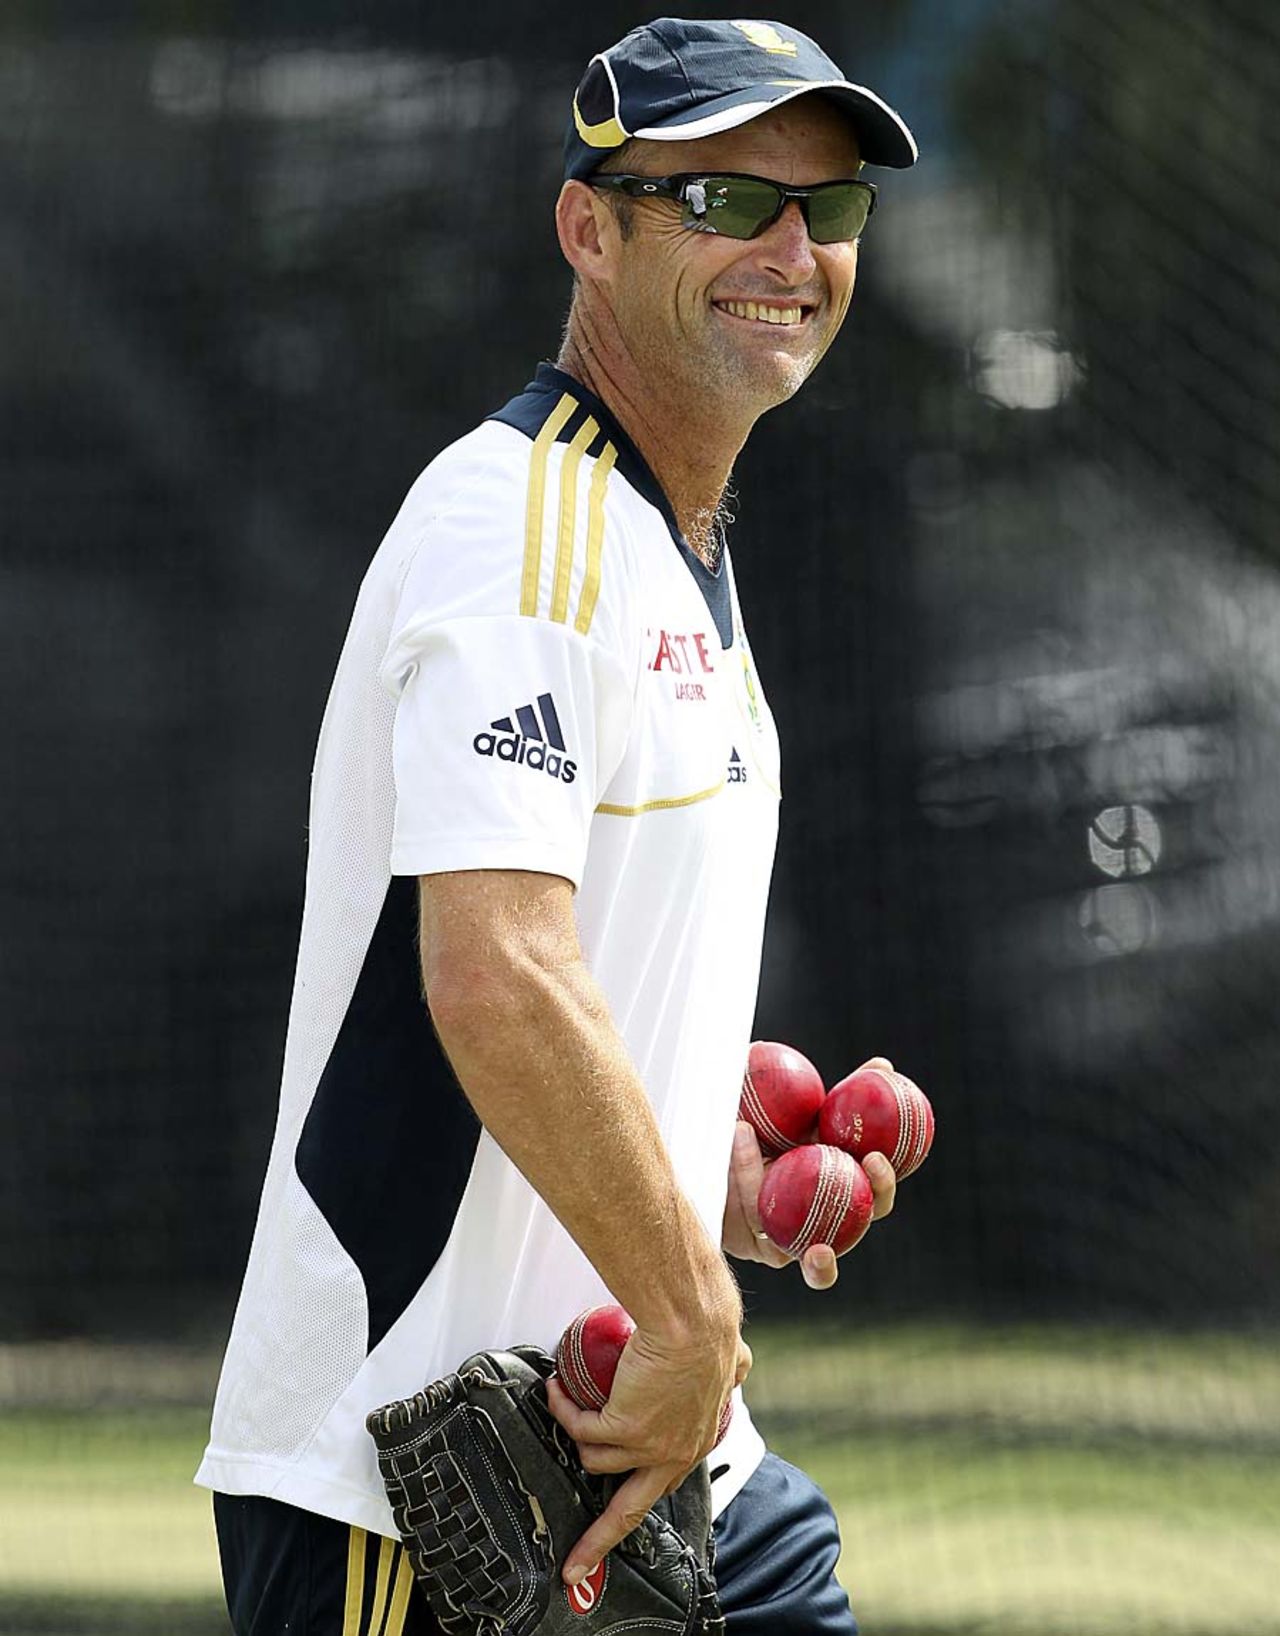 South Africa coach Gary Kirsten smiles at practice, Brisbane, November 7, 2012